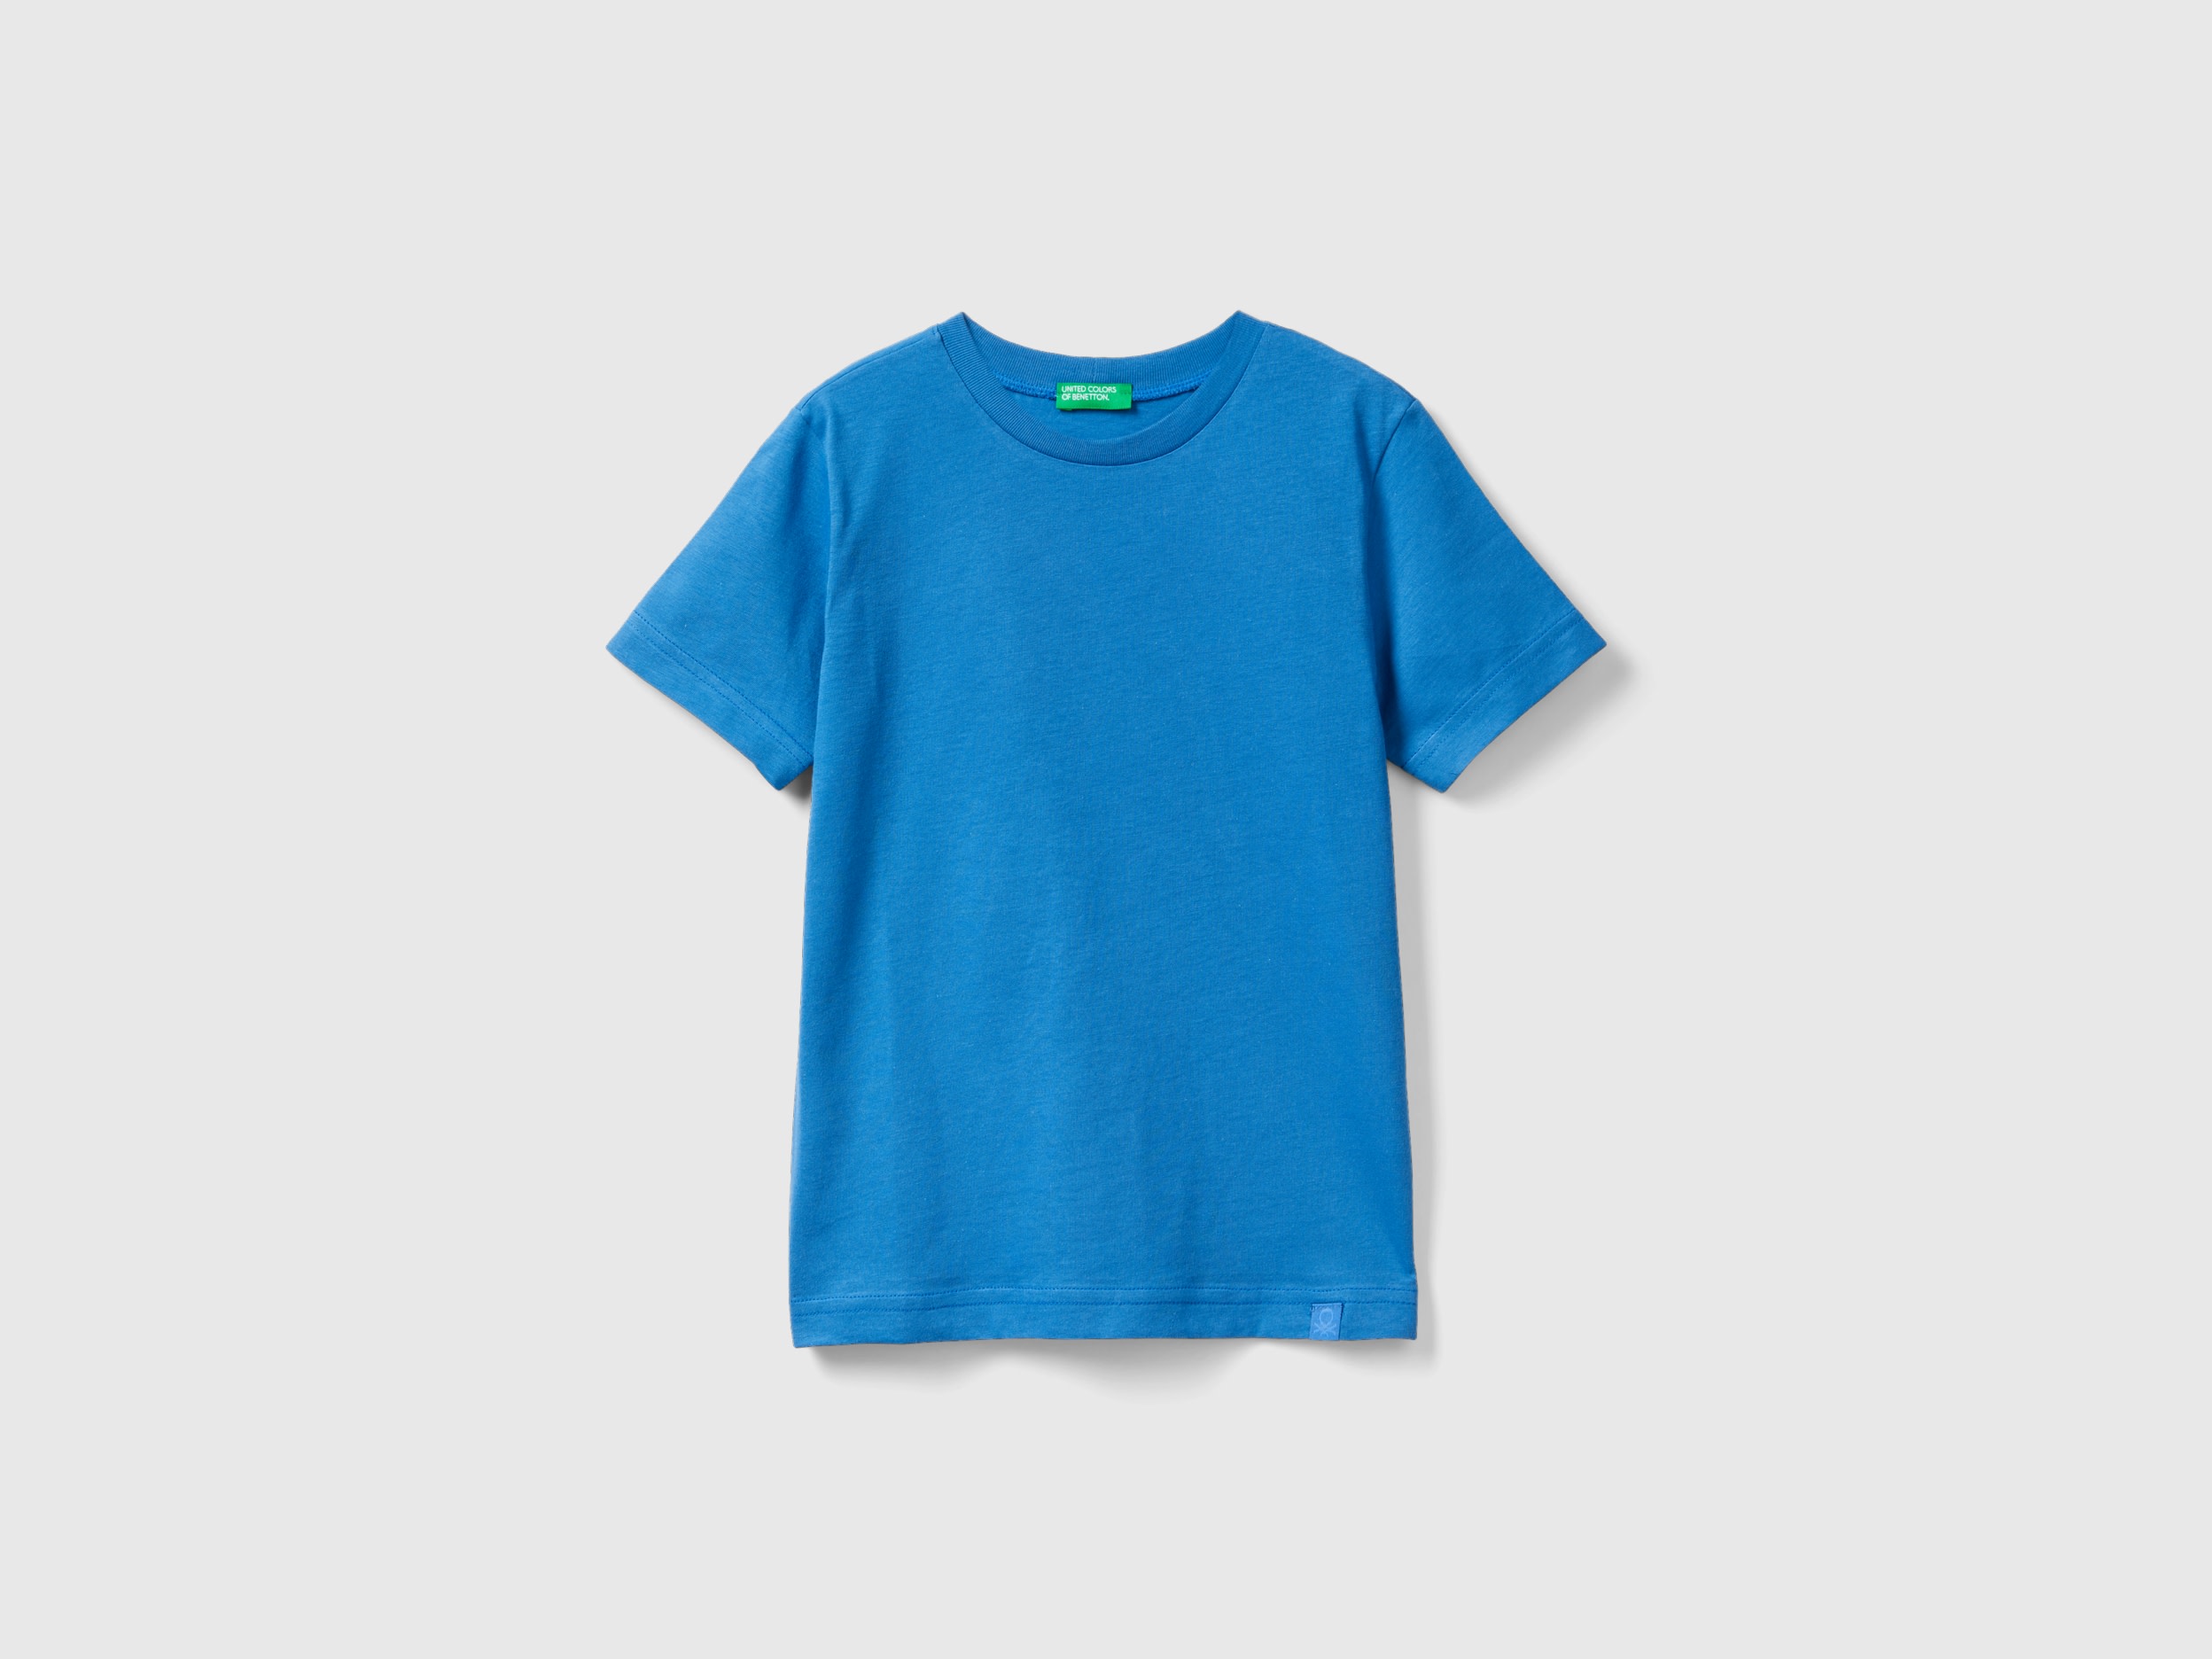 Benetton, Organic Cotton T-shirt, size S, Blue, Kids